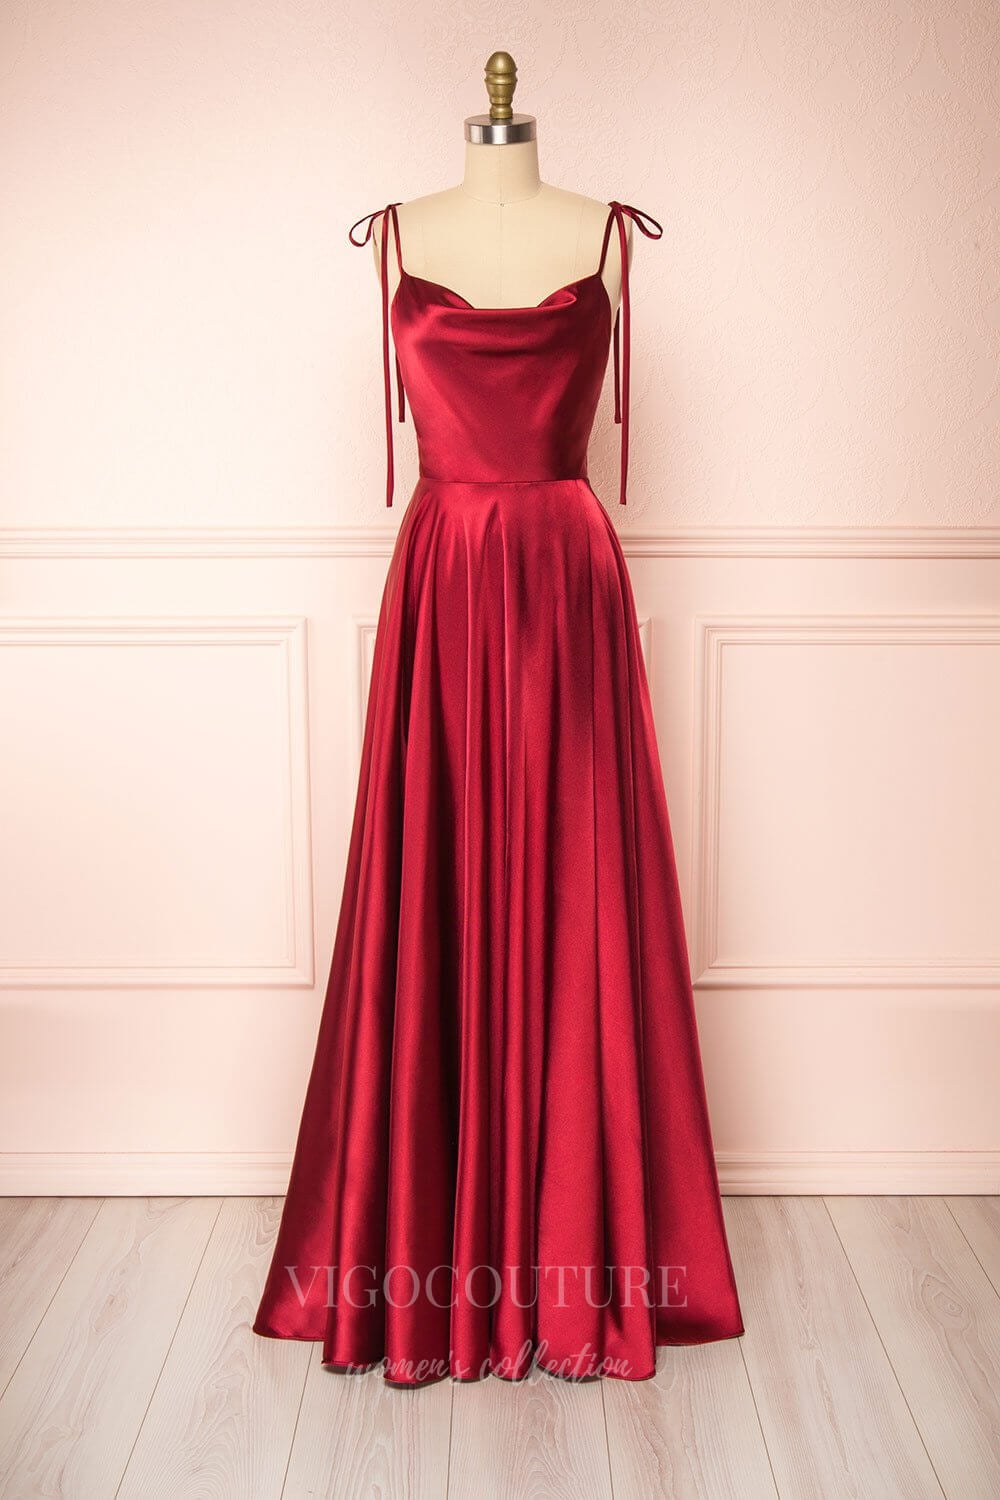 vigocouture-Dusty Pink Spaghetti Strap Prom Dress 20578-Prom Dresses-vigocouture-Burgundy-US2-